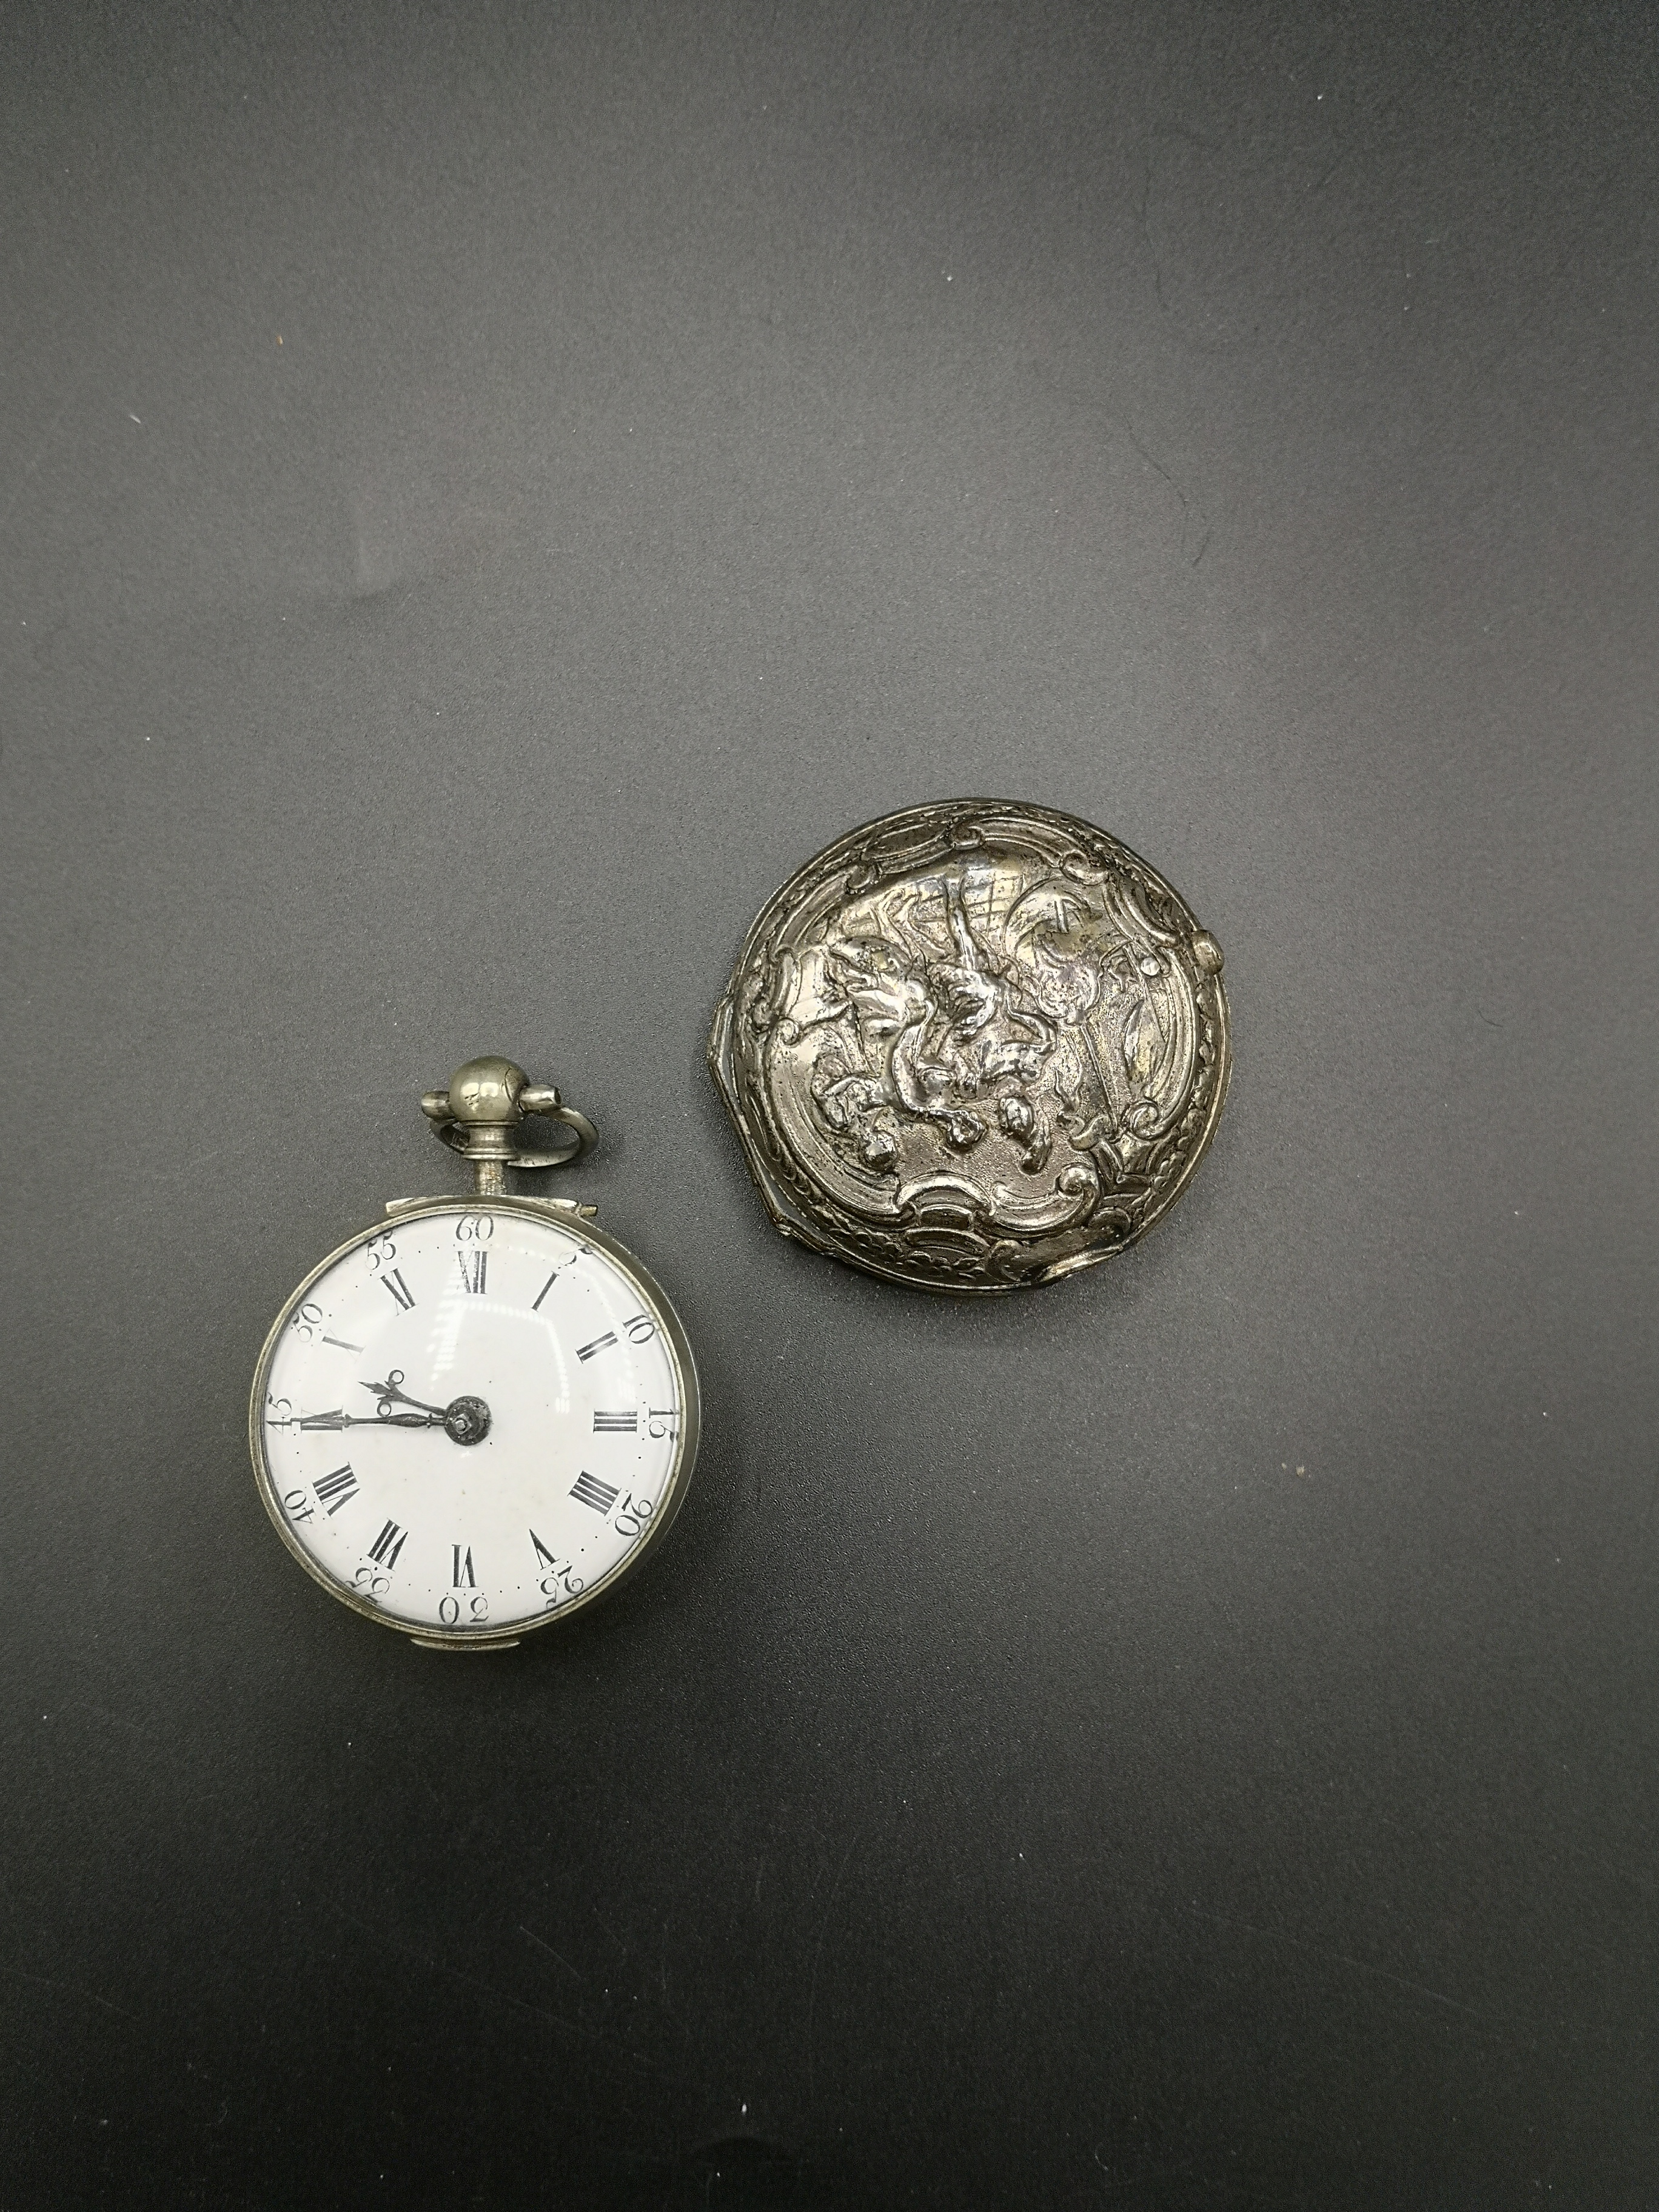 Verge pocket watch by Jn Edmonds of London - Image 4 of 4